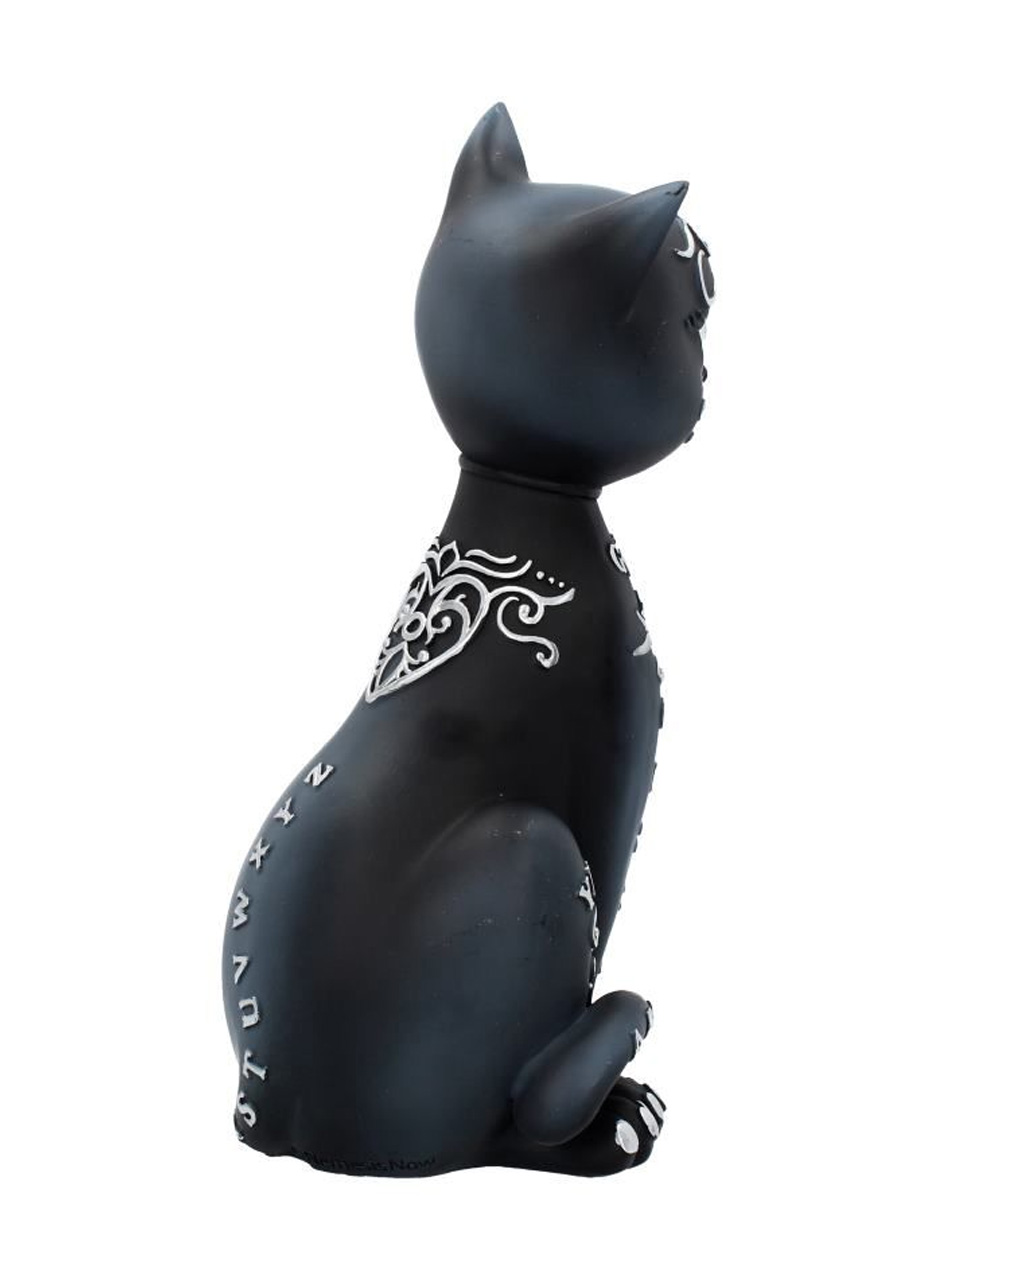 Katzenfigur 26cm als Mystic Ouija Geschenkartikel